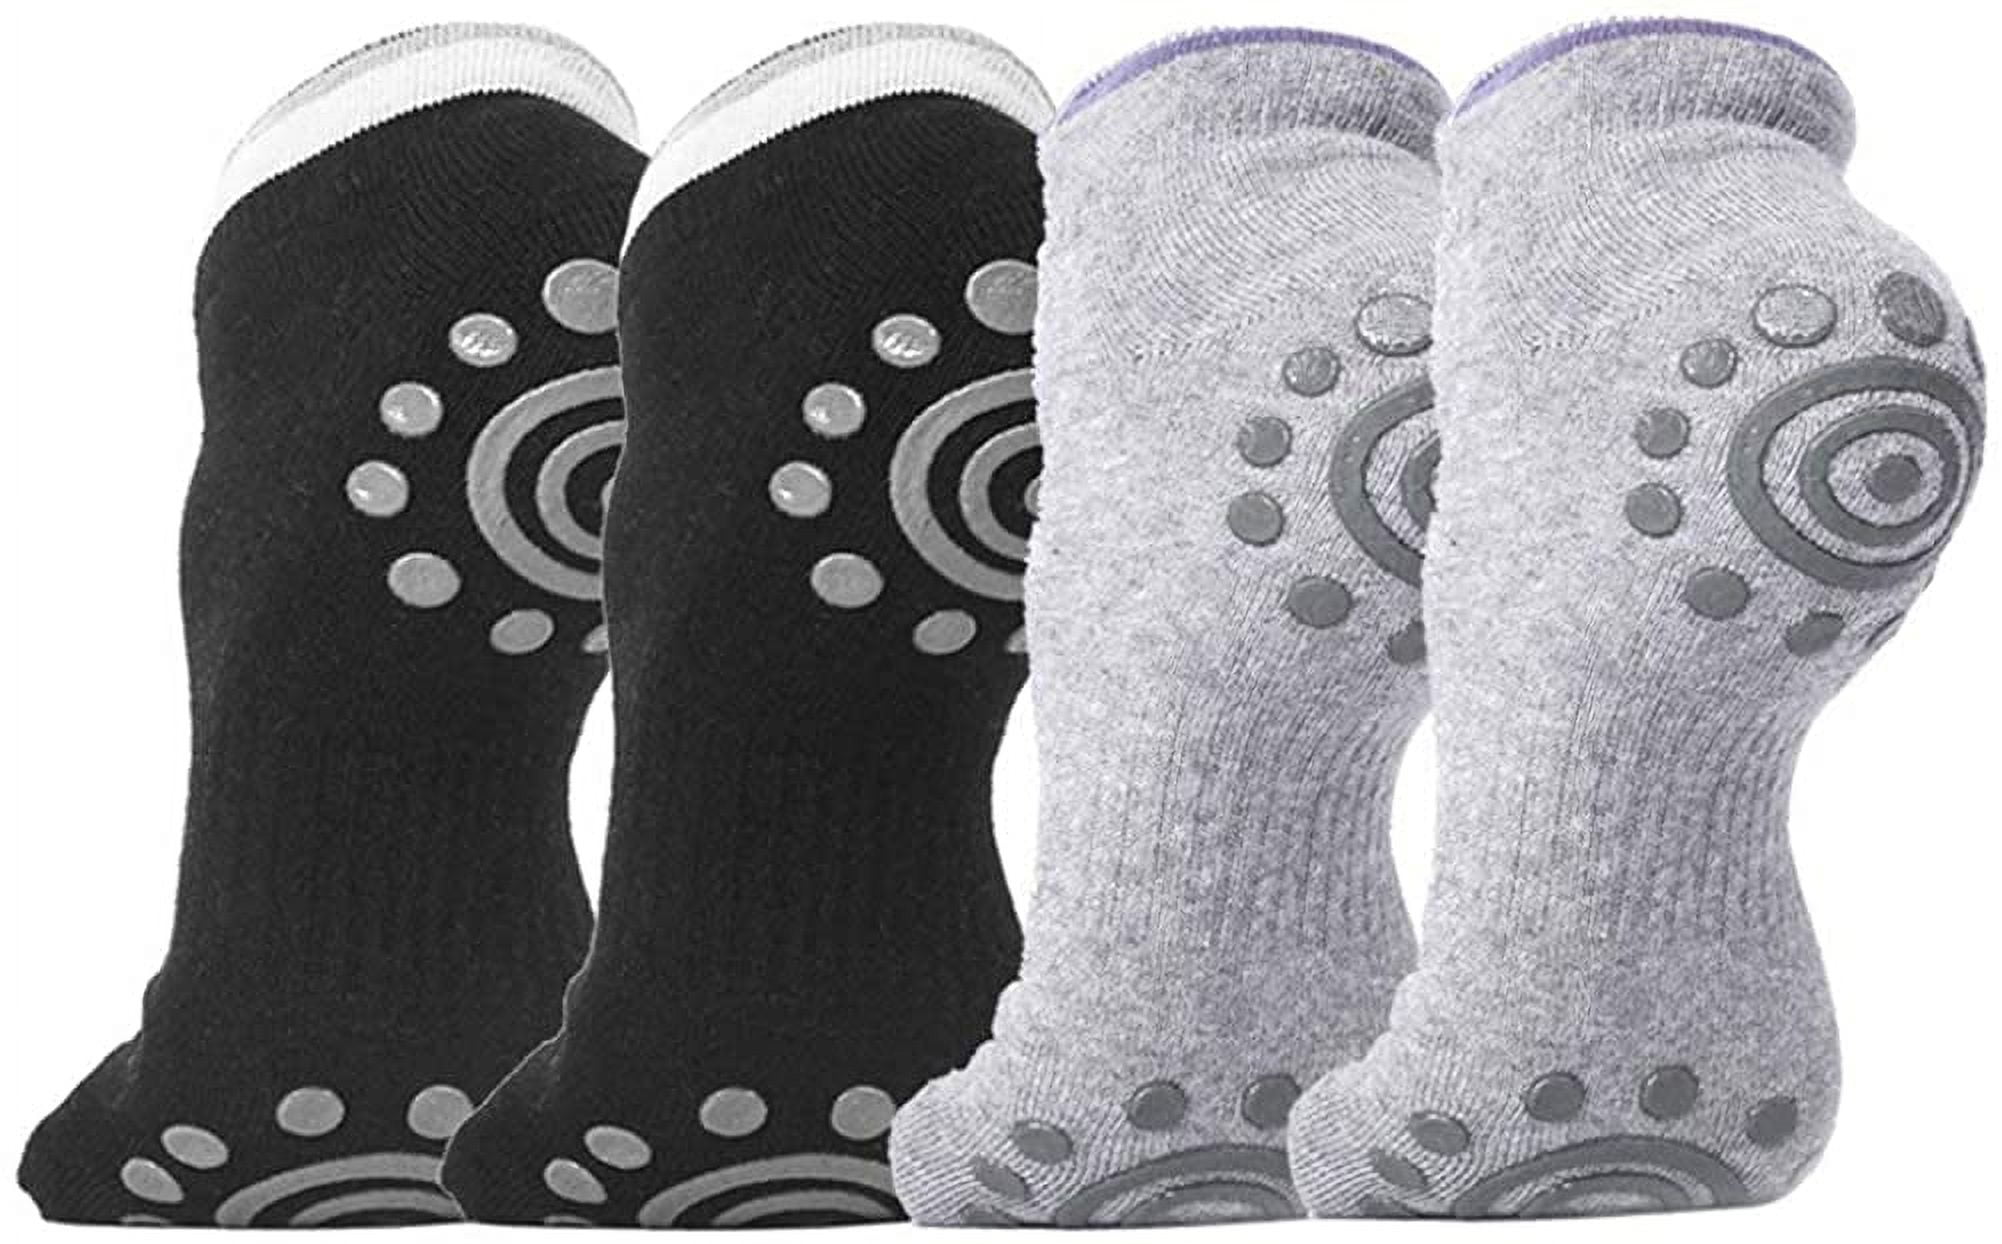 DubeeBaby Women's Yoga Socks Non Slip Socks Hospital Socks 